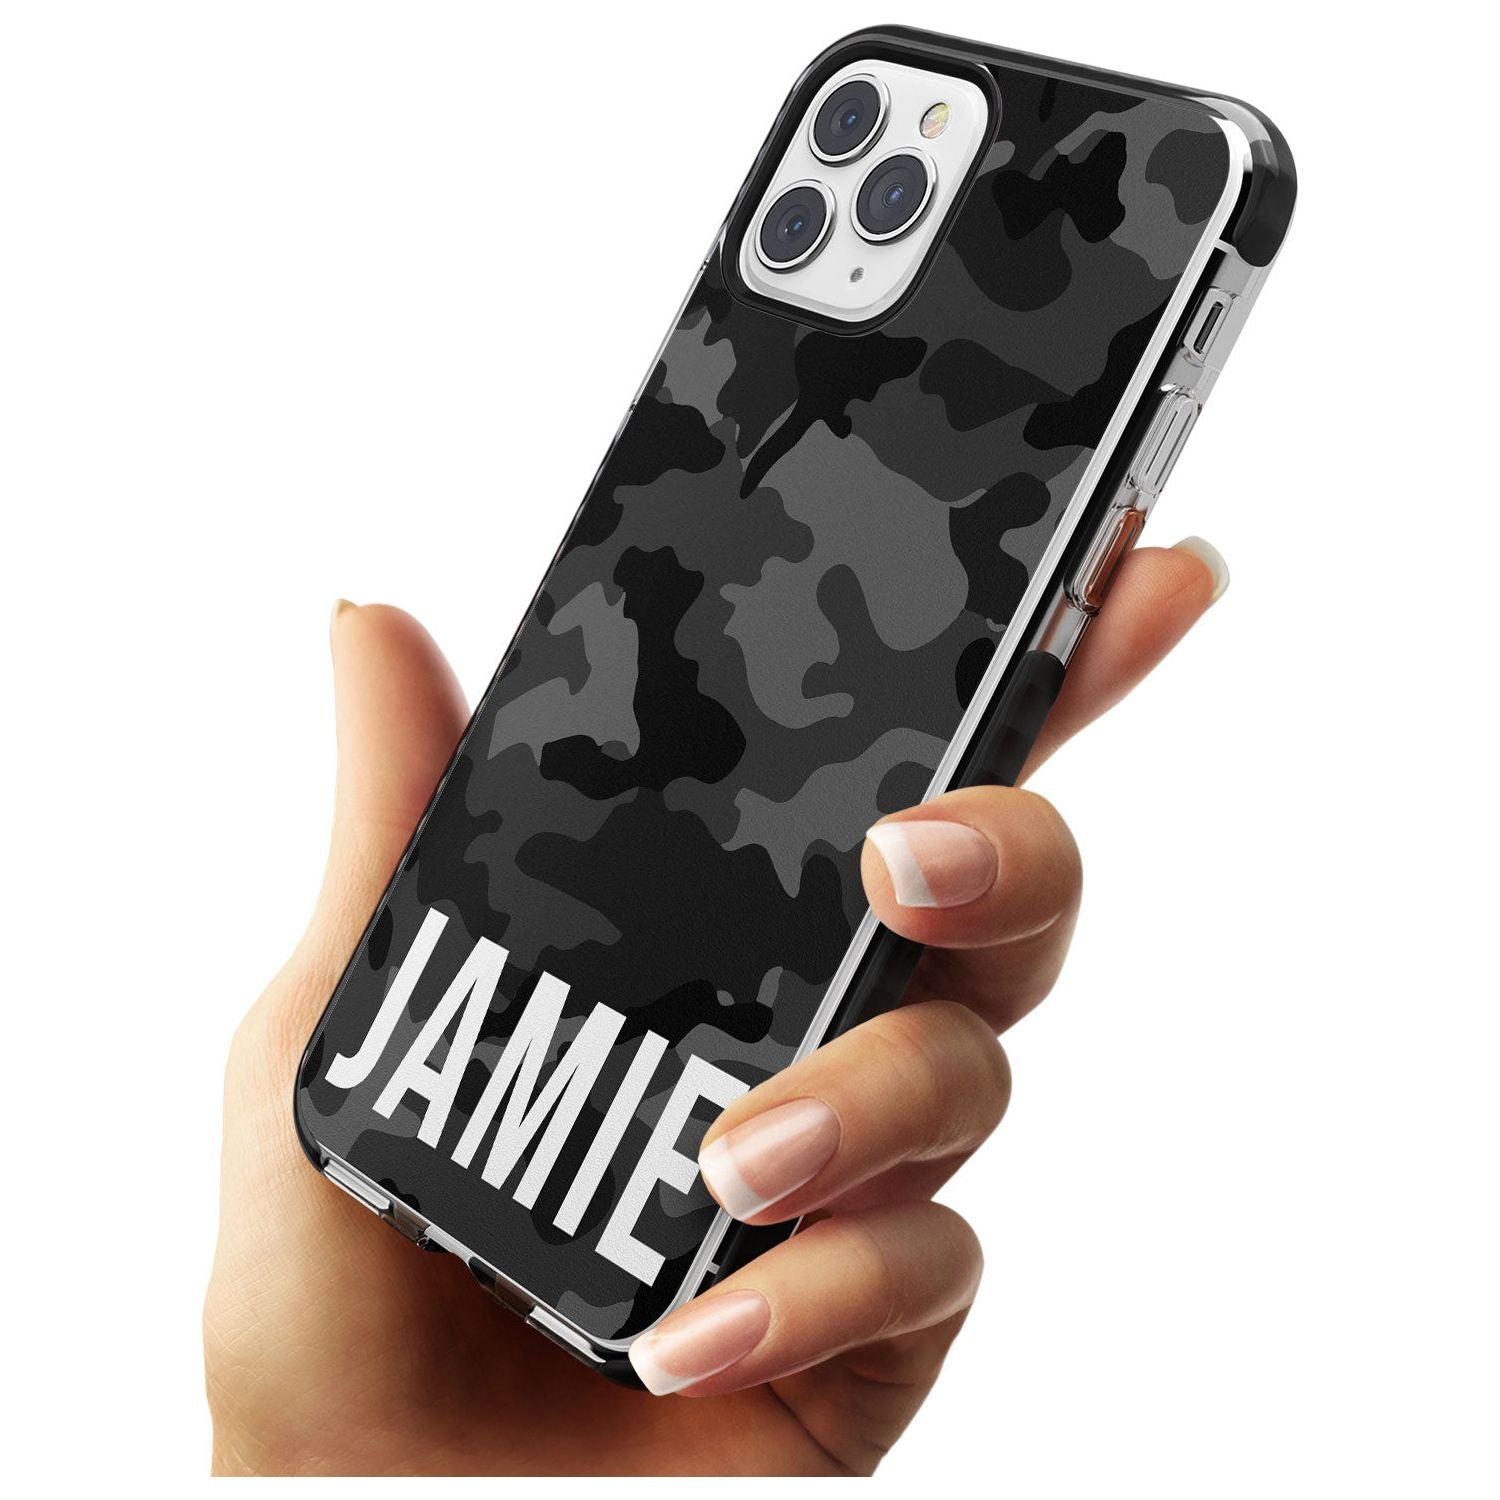 Horizontal Name Personalised Black Camouflage Black Impact Phone Case for iPhone 11 Pro Max